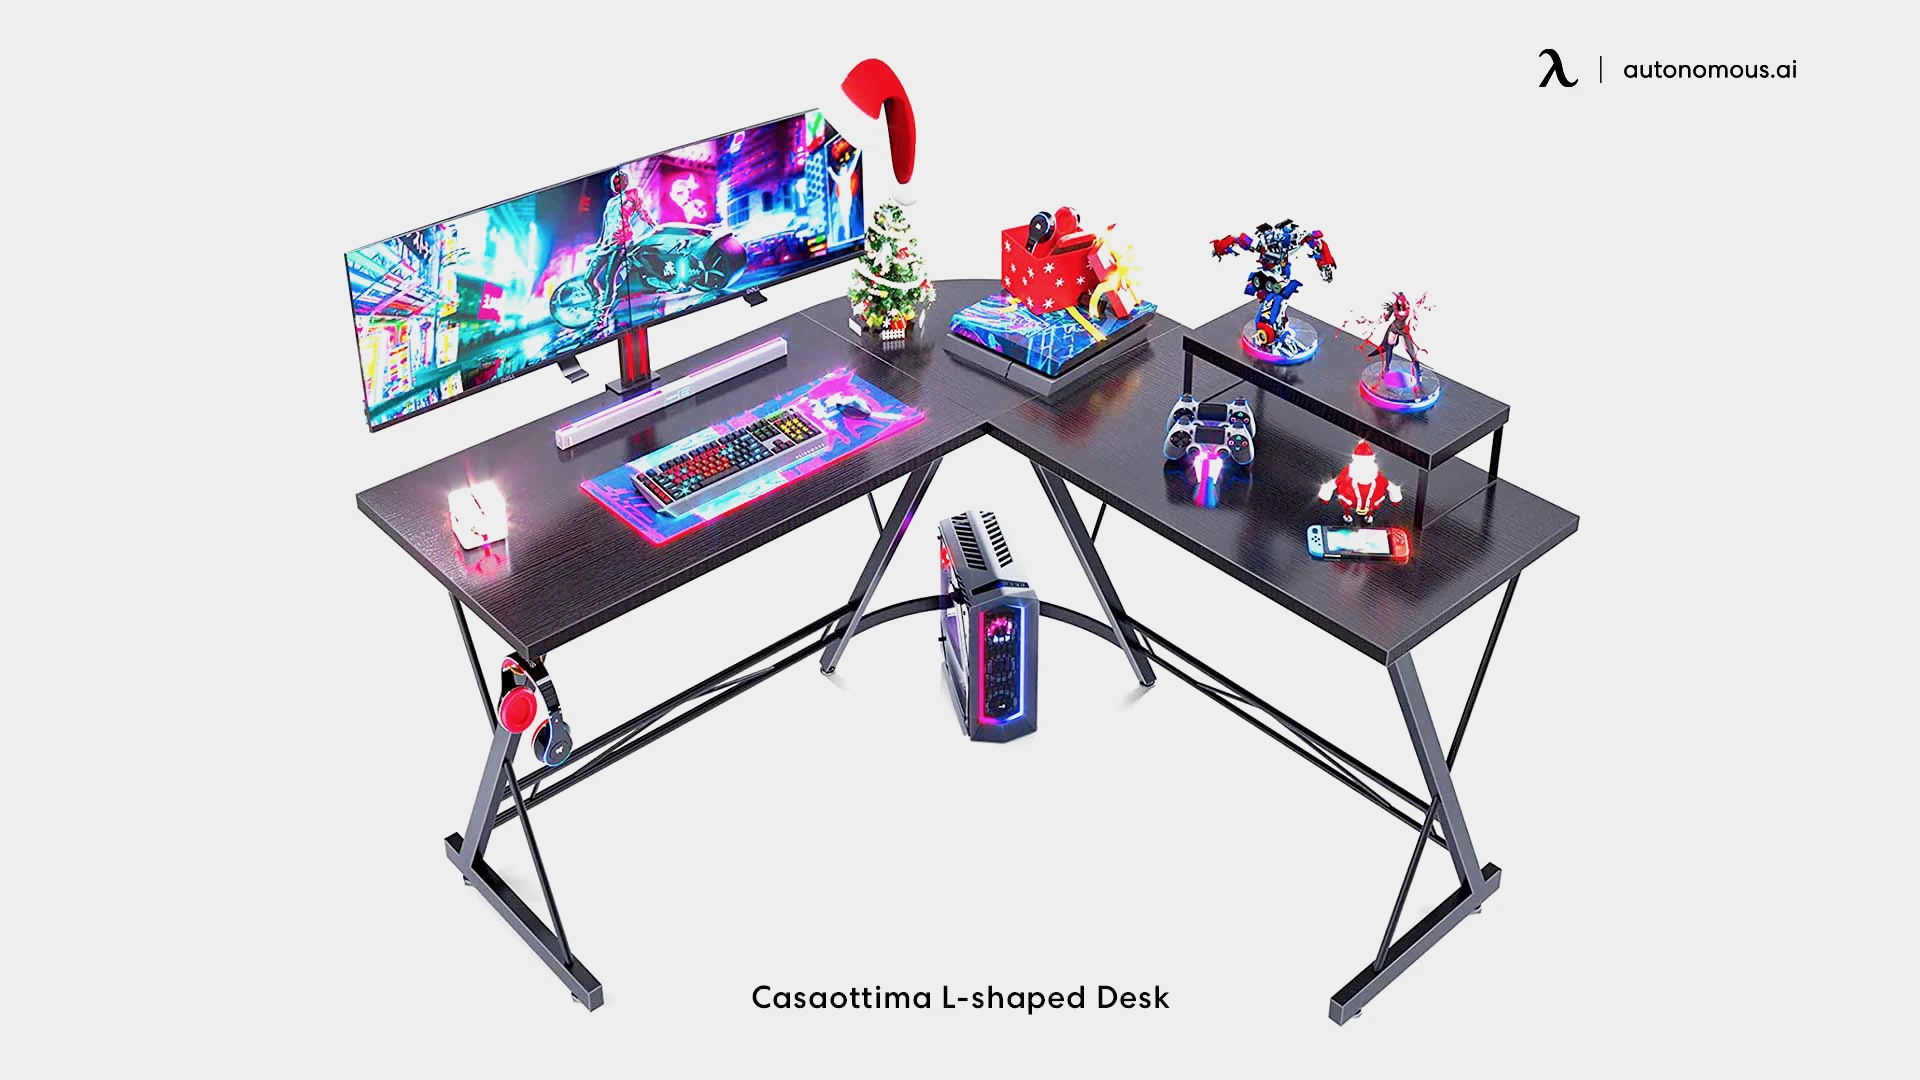 L-shaped Gamer Desk by Casaottima